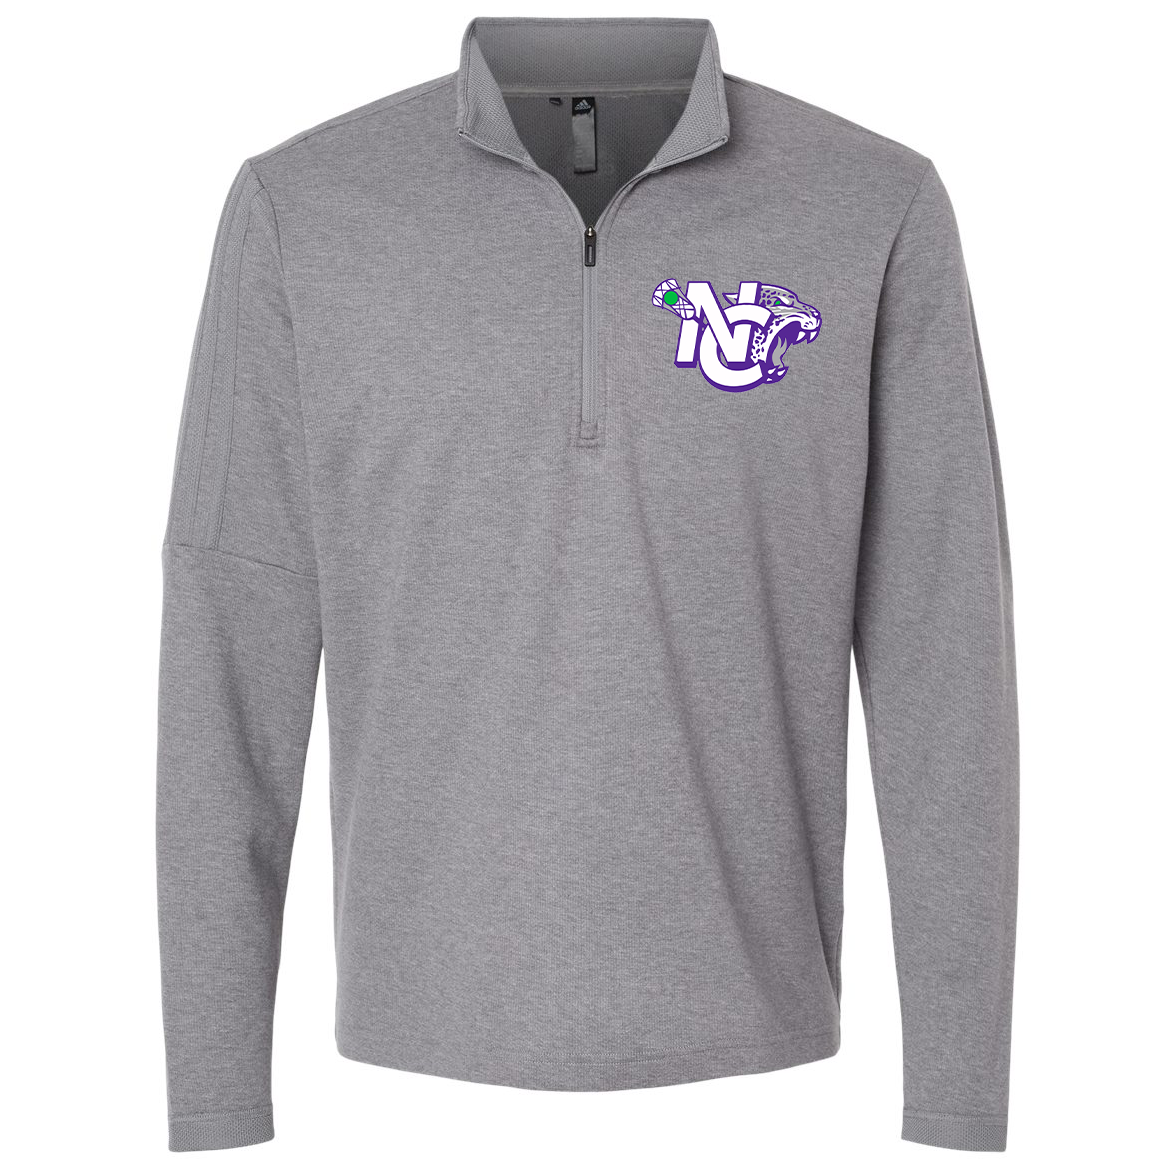 North Creek Lacrosse Adidas 1/4 Zip Sweater